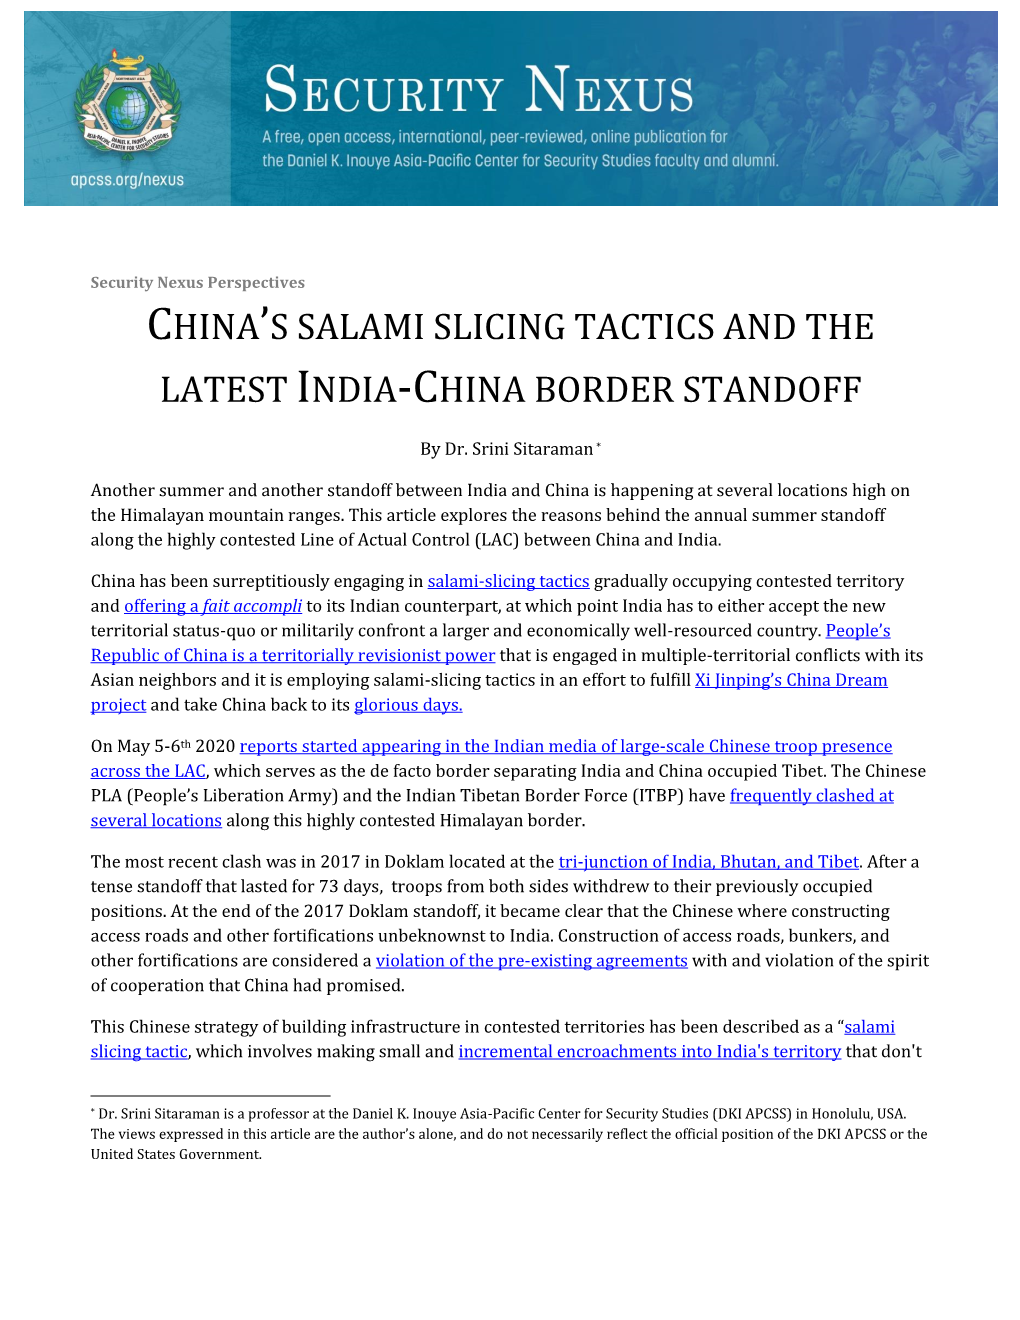 China's Salami Slicing Tactics and the Latest India-China Border Standoff